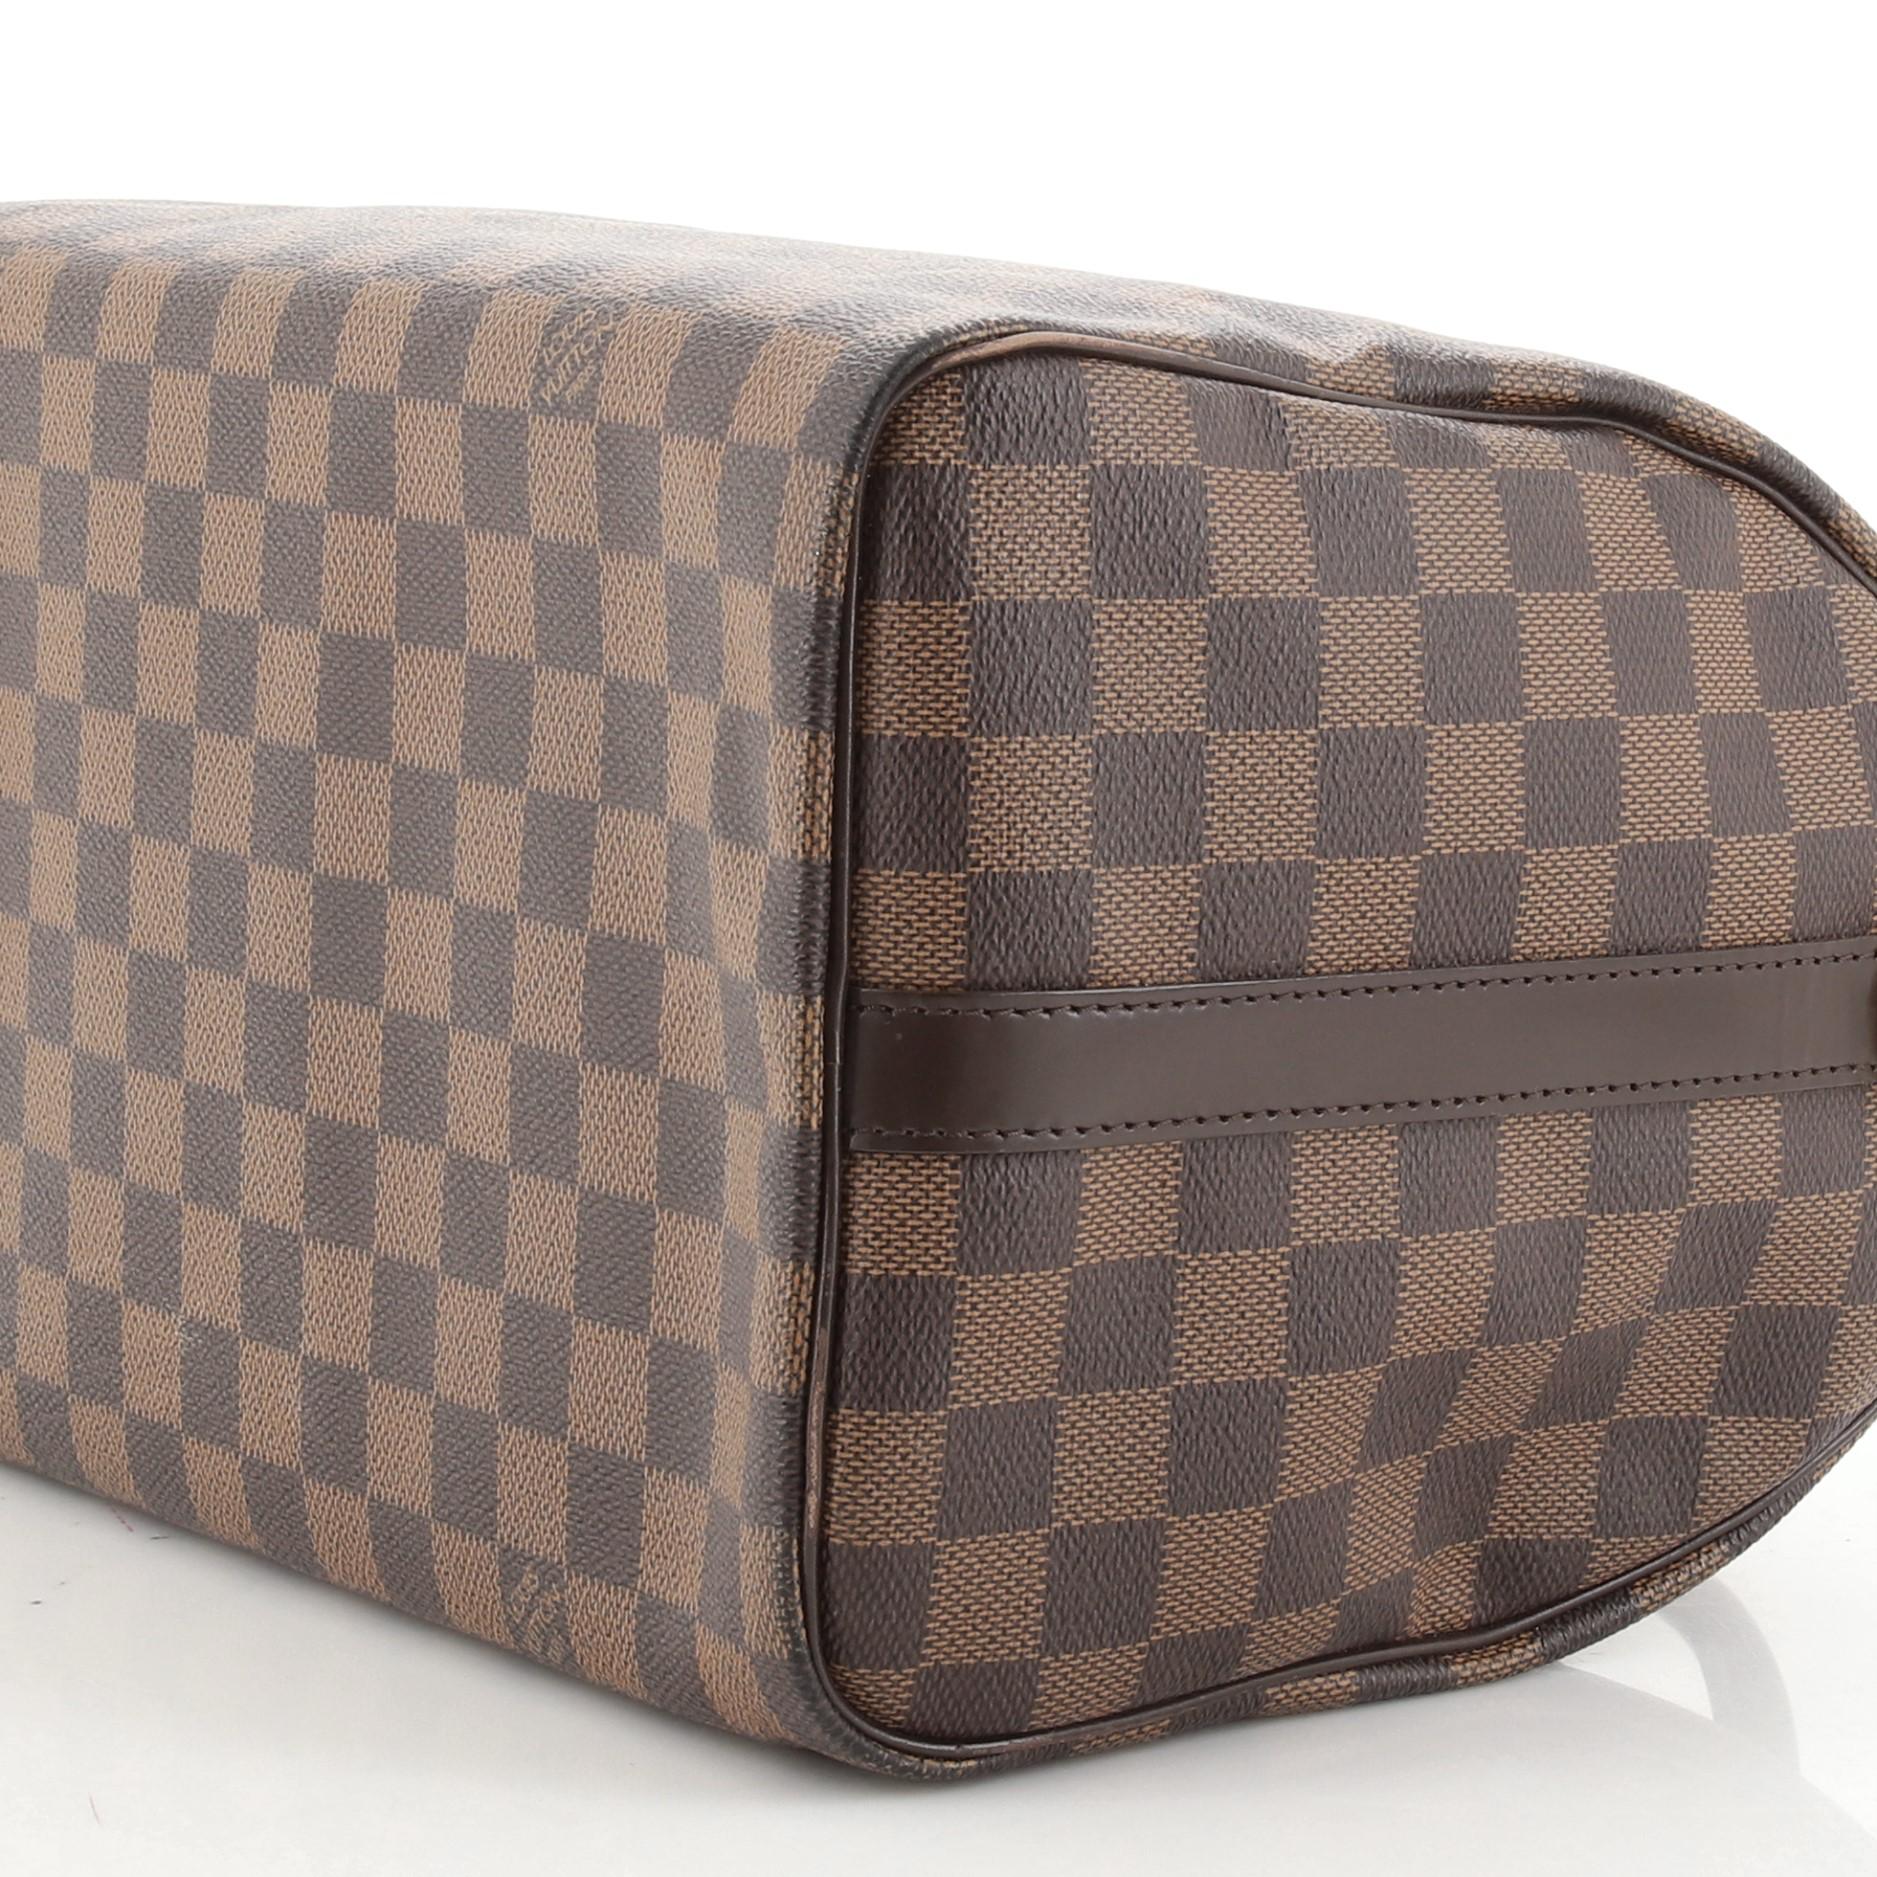 Louis Vuitton Speedy Bandouliere Bag Damier 30 1